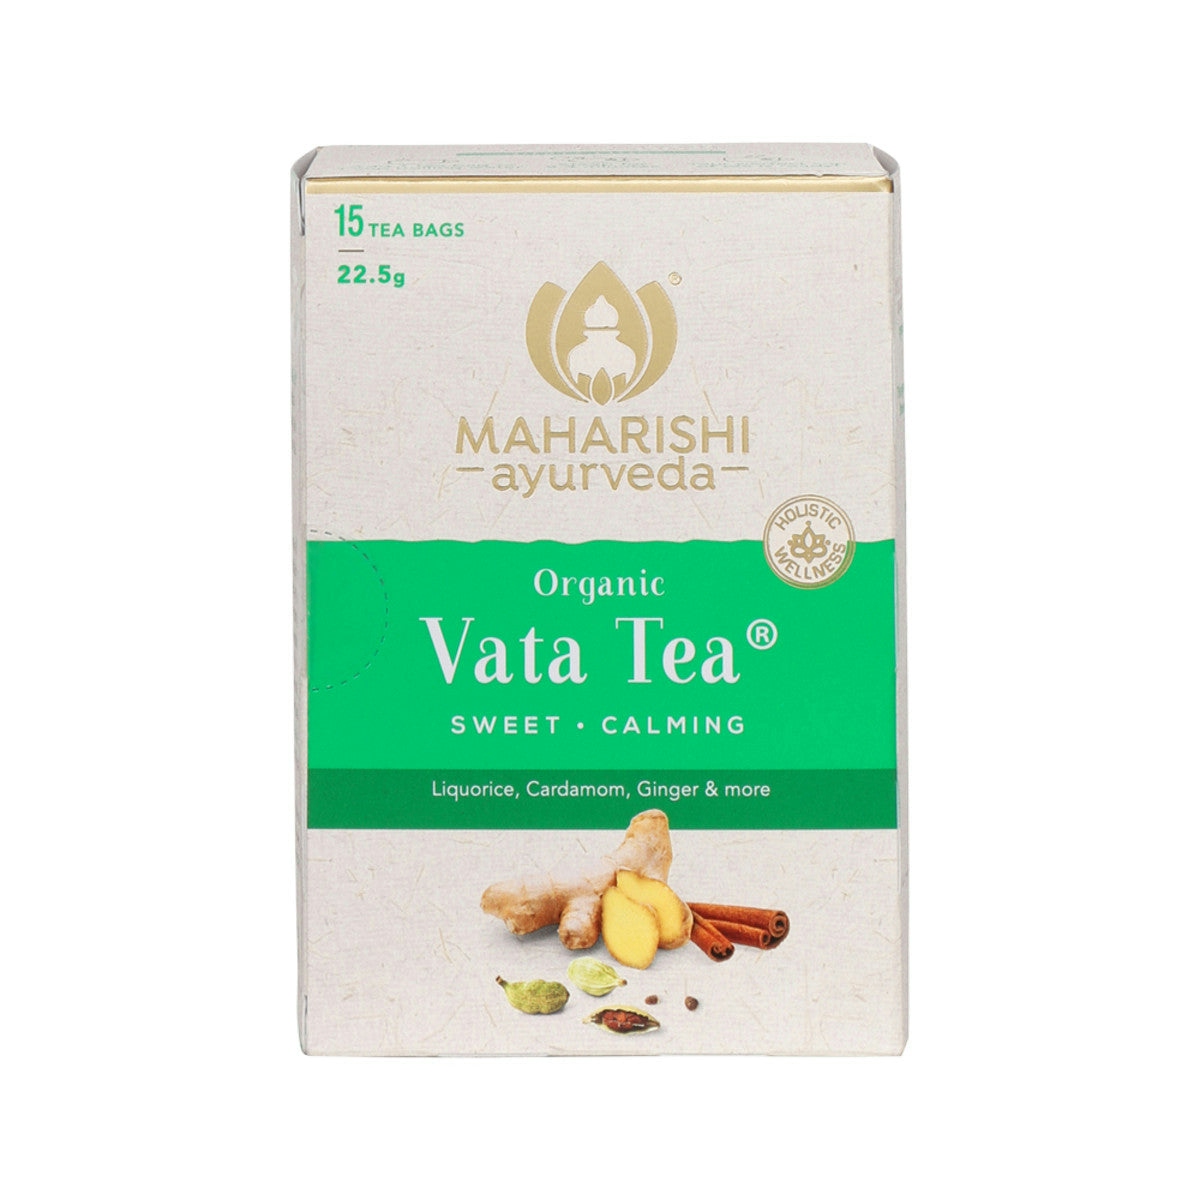 image of Maharishi Ayurveda Organic Vata Tea x 15 Tea Bags (22.5g) on white background 